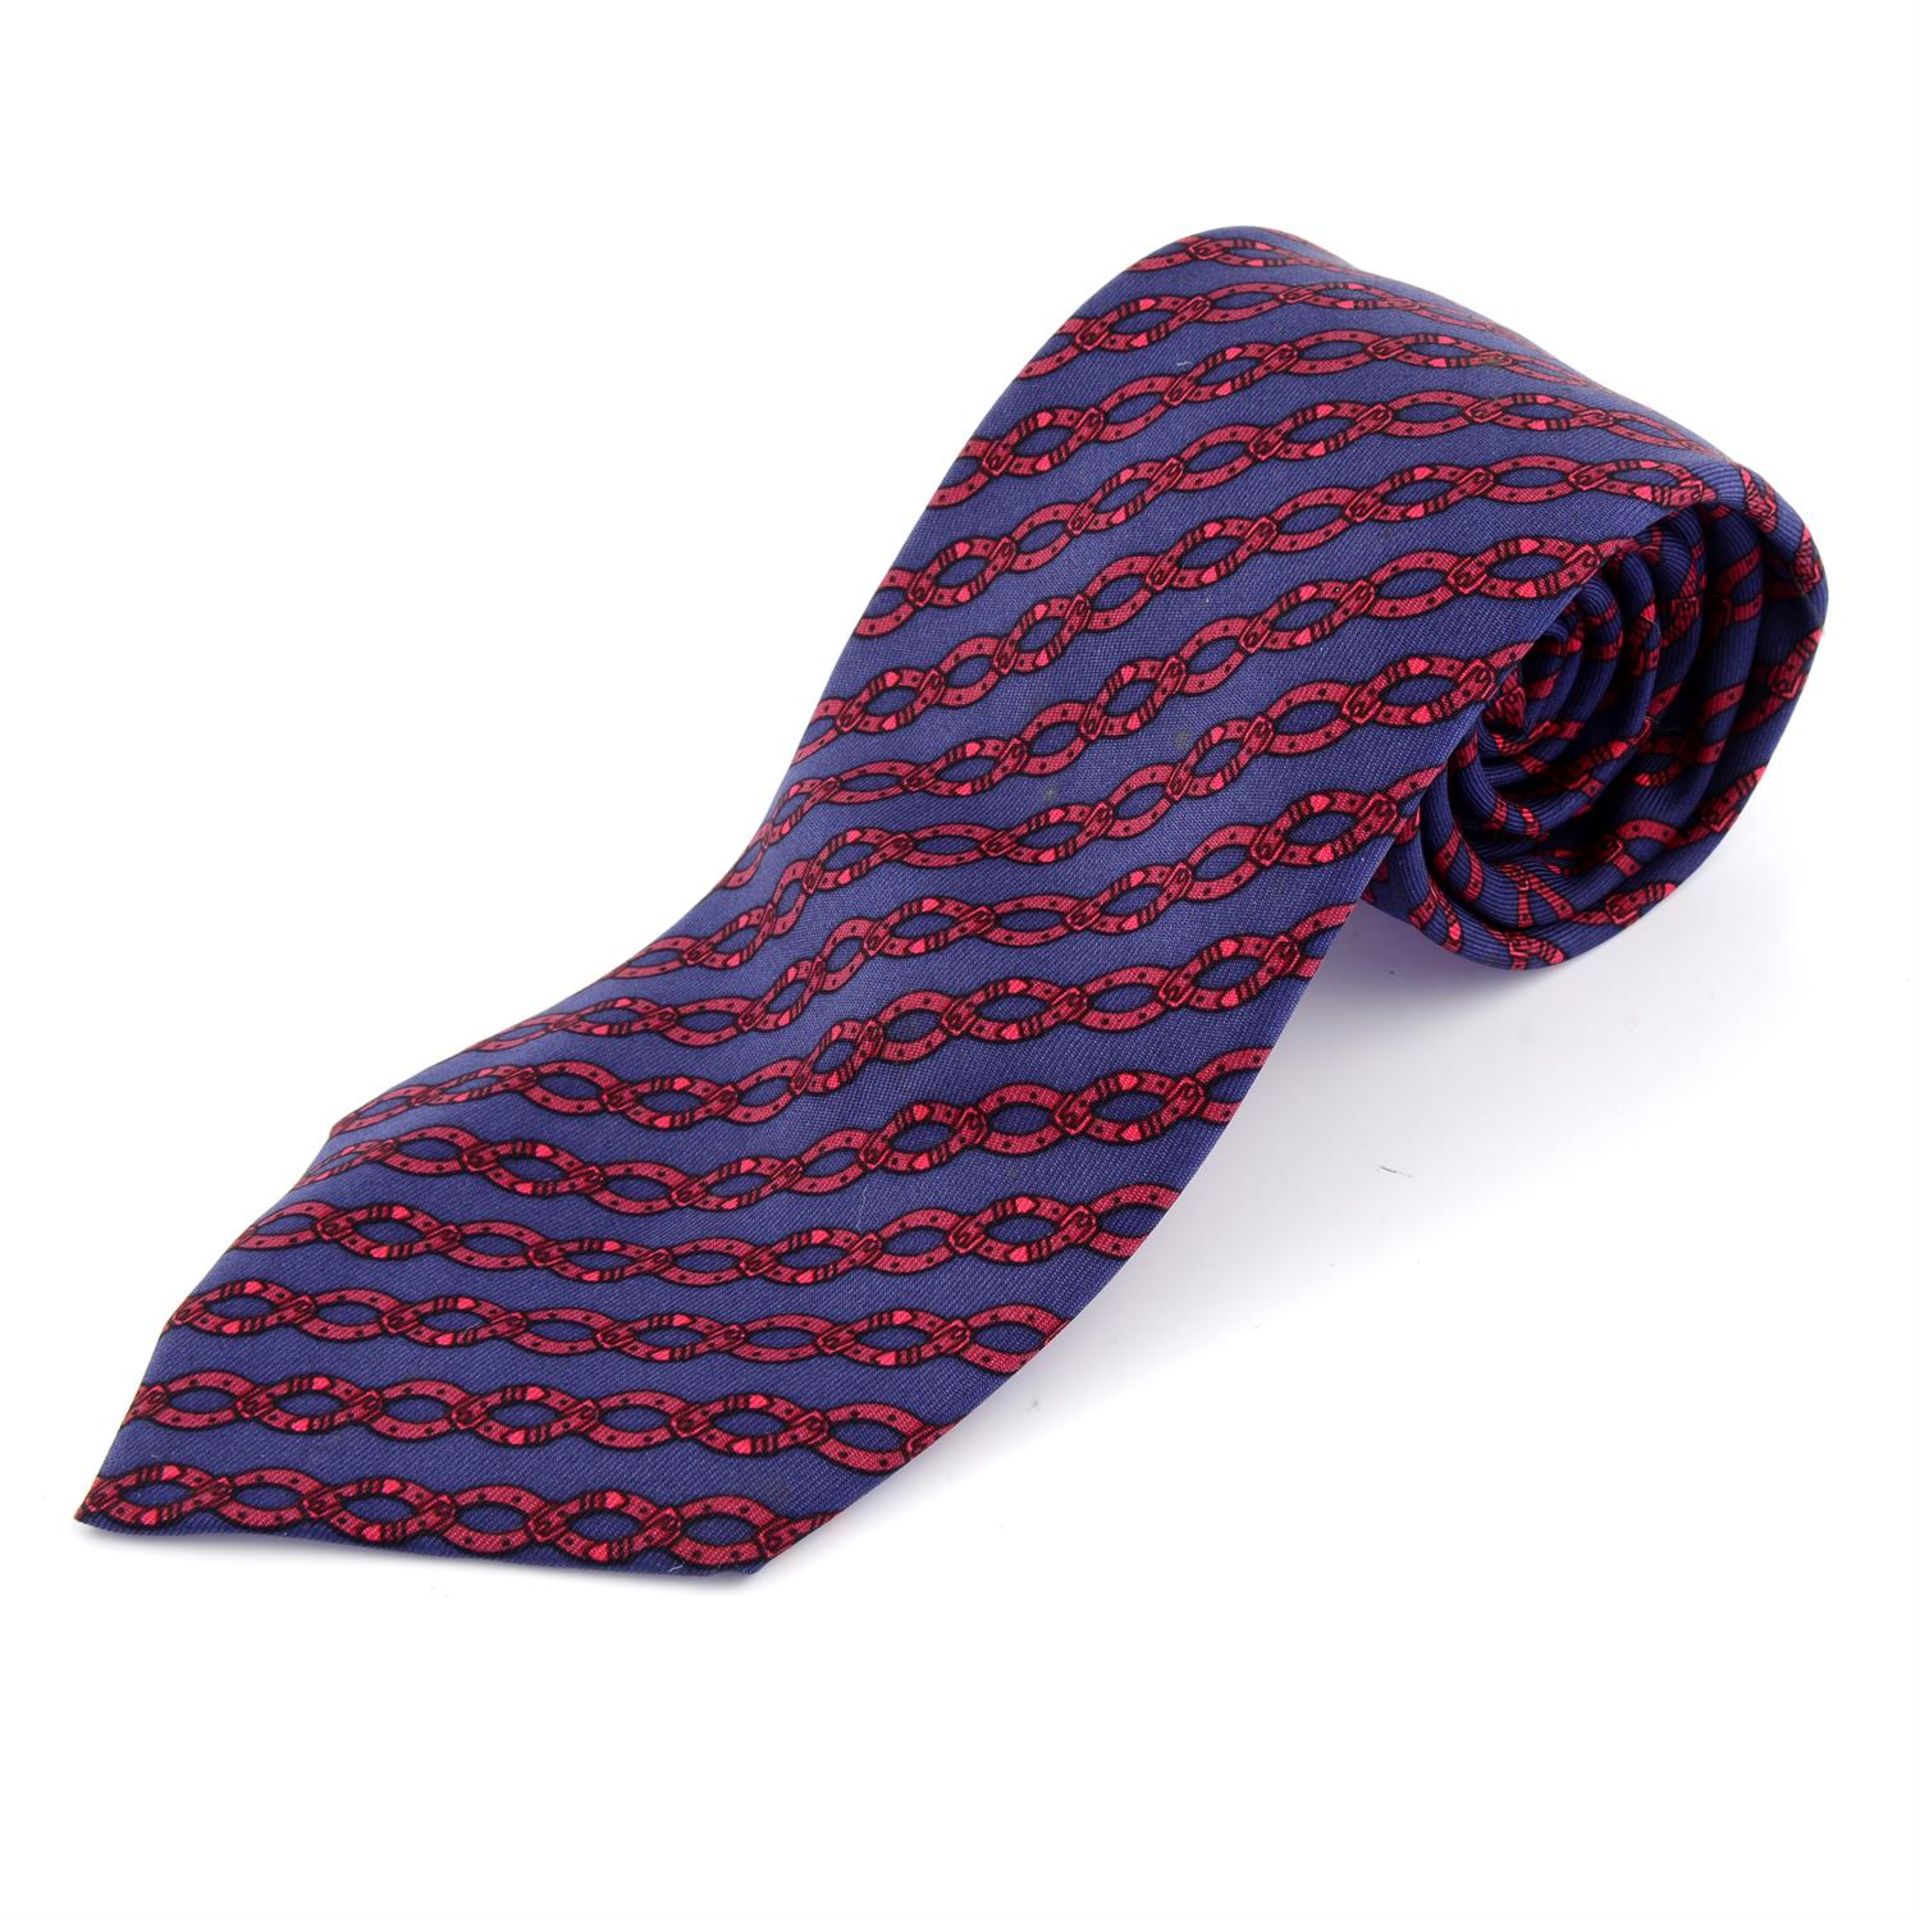 HERMÈS - a blue and red chain print silk tie.